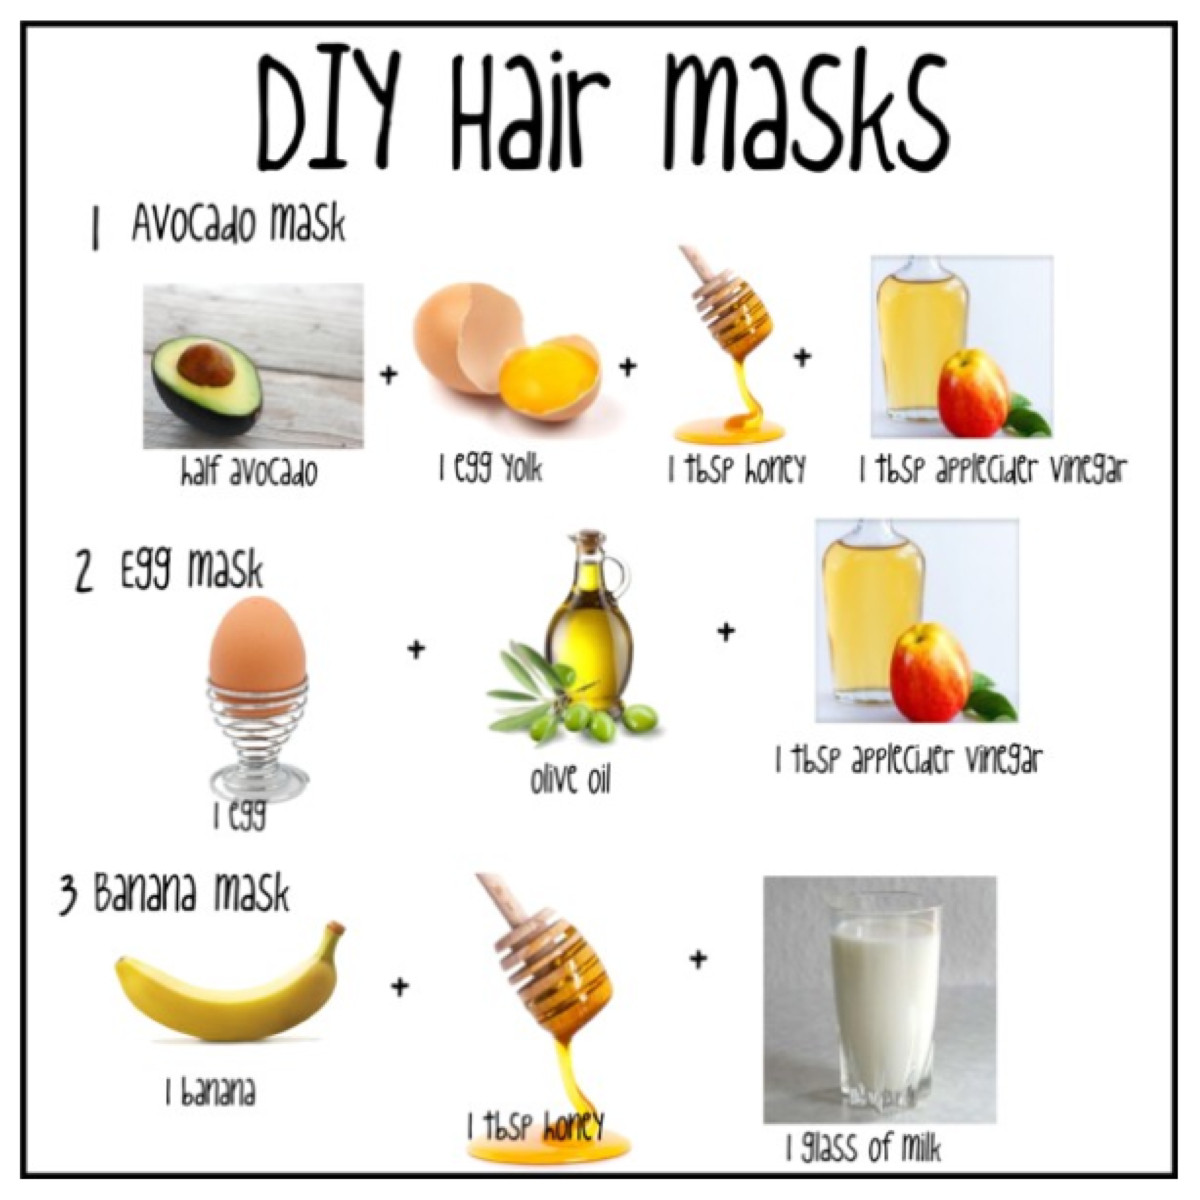 DIY Hair Mask For Growth
 DIY Hair Masks